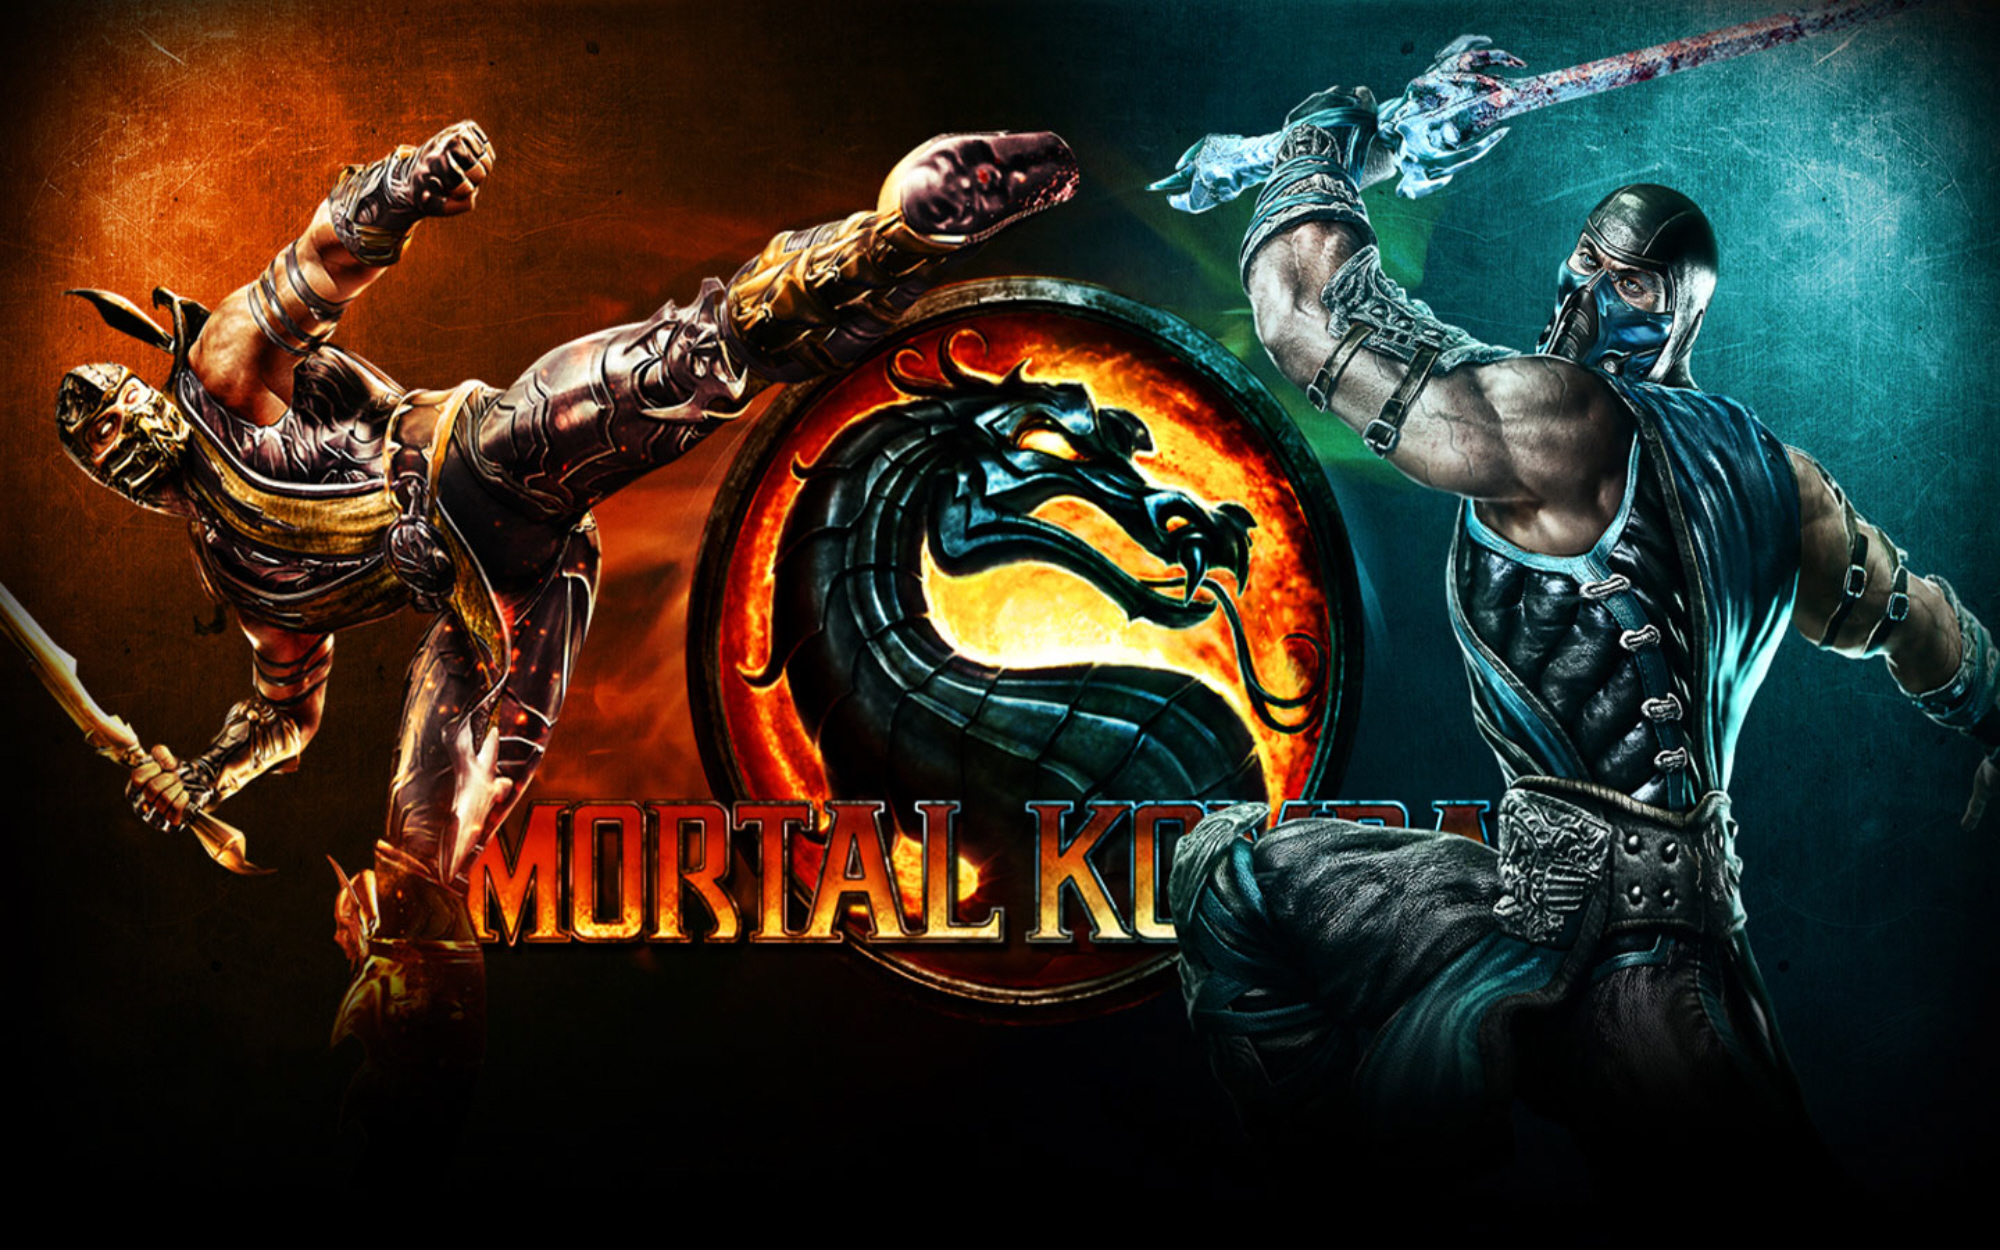 Mortal kombat wallpaper